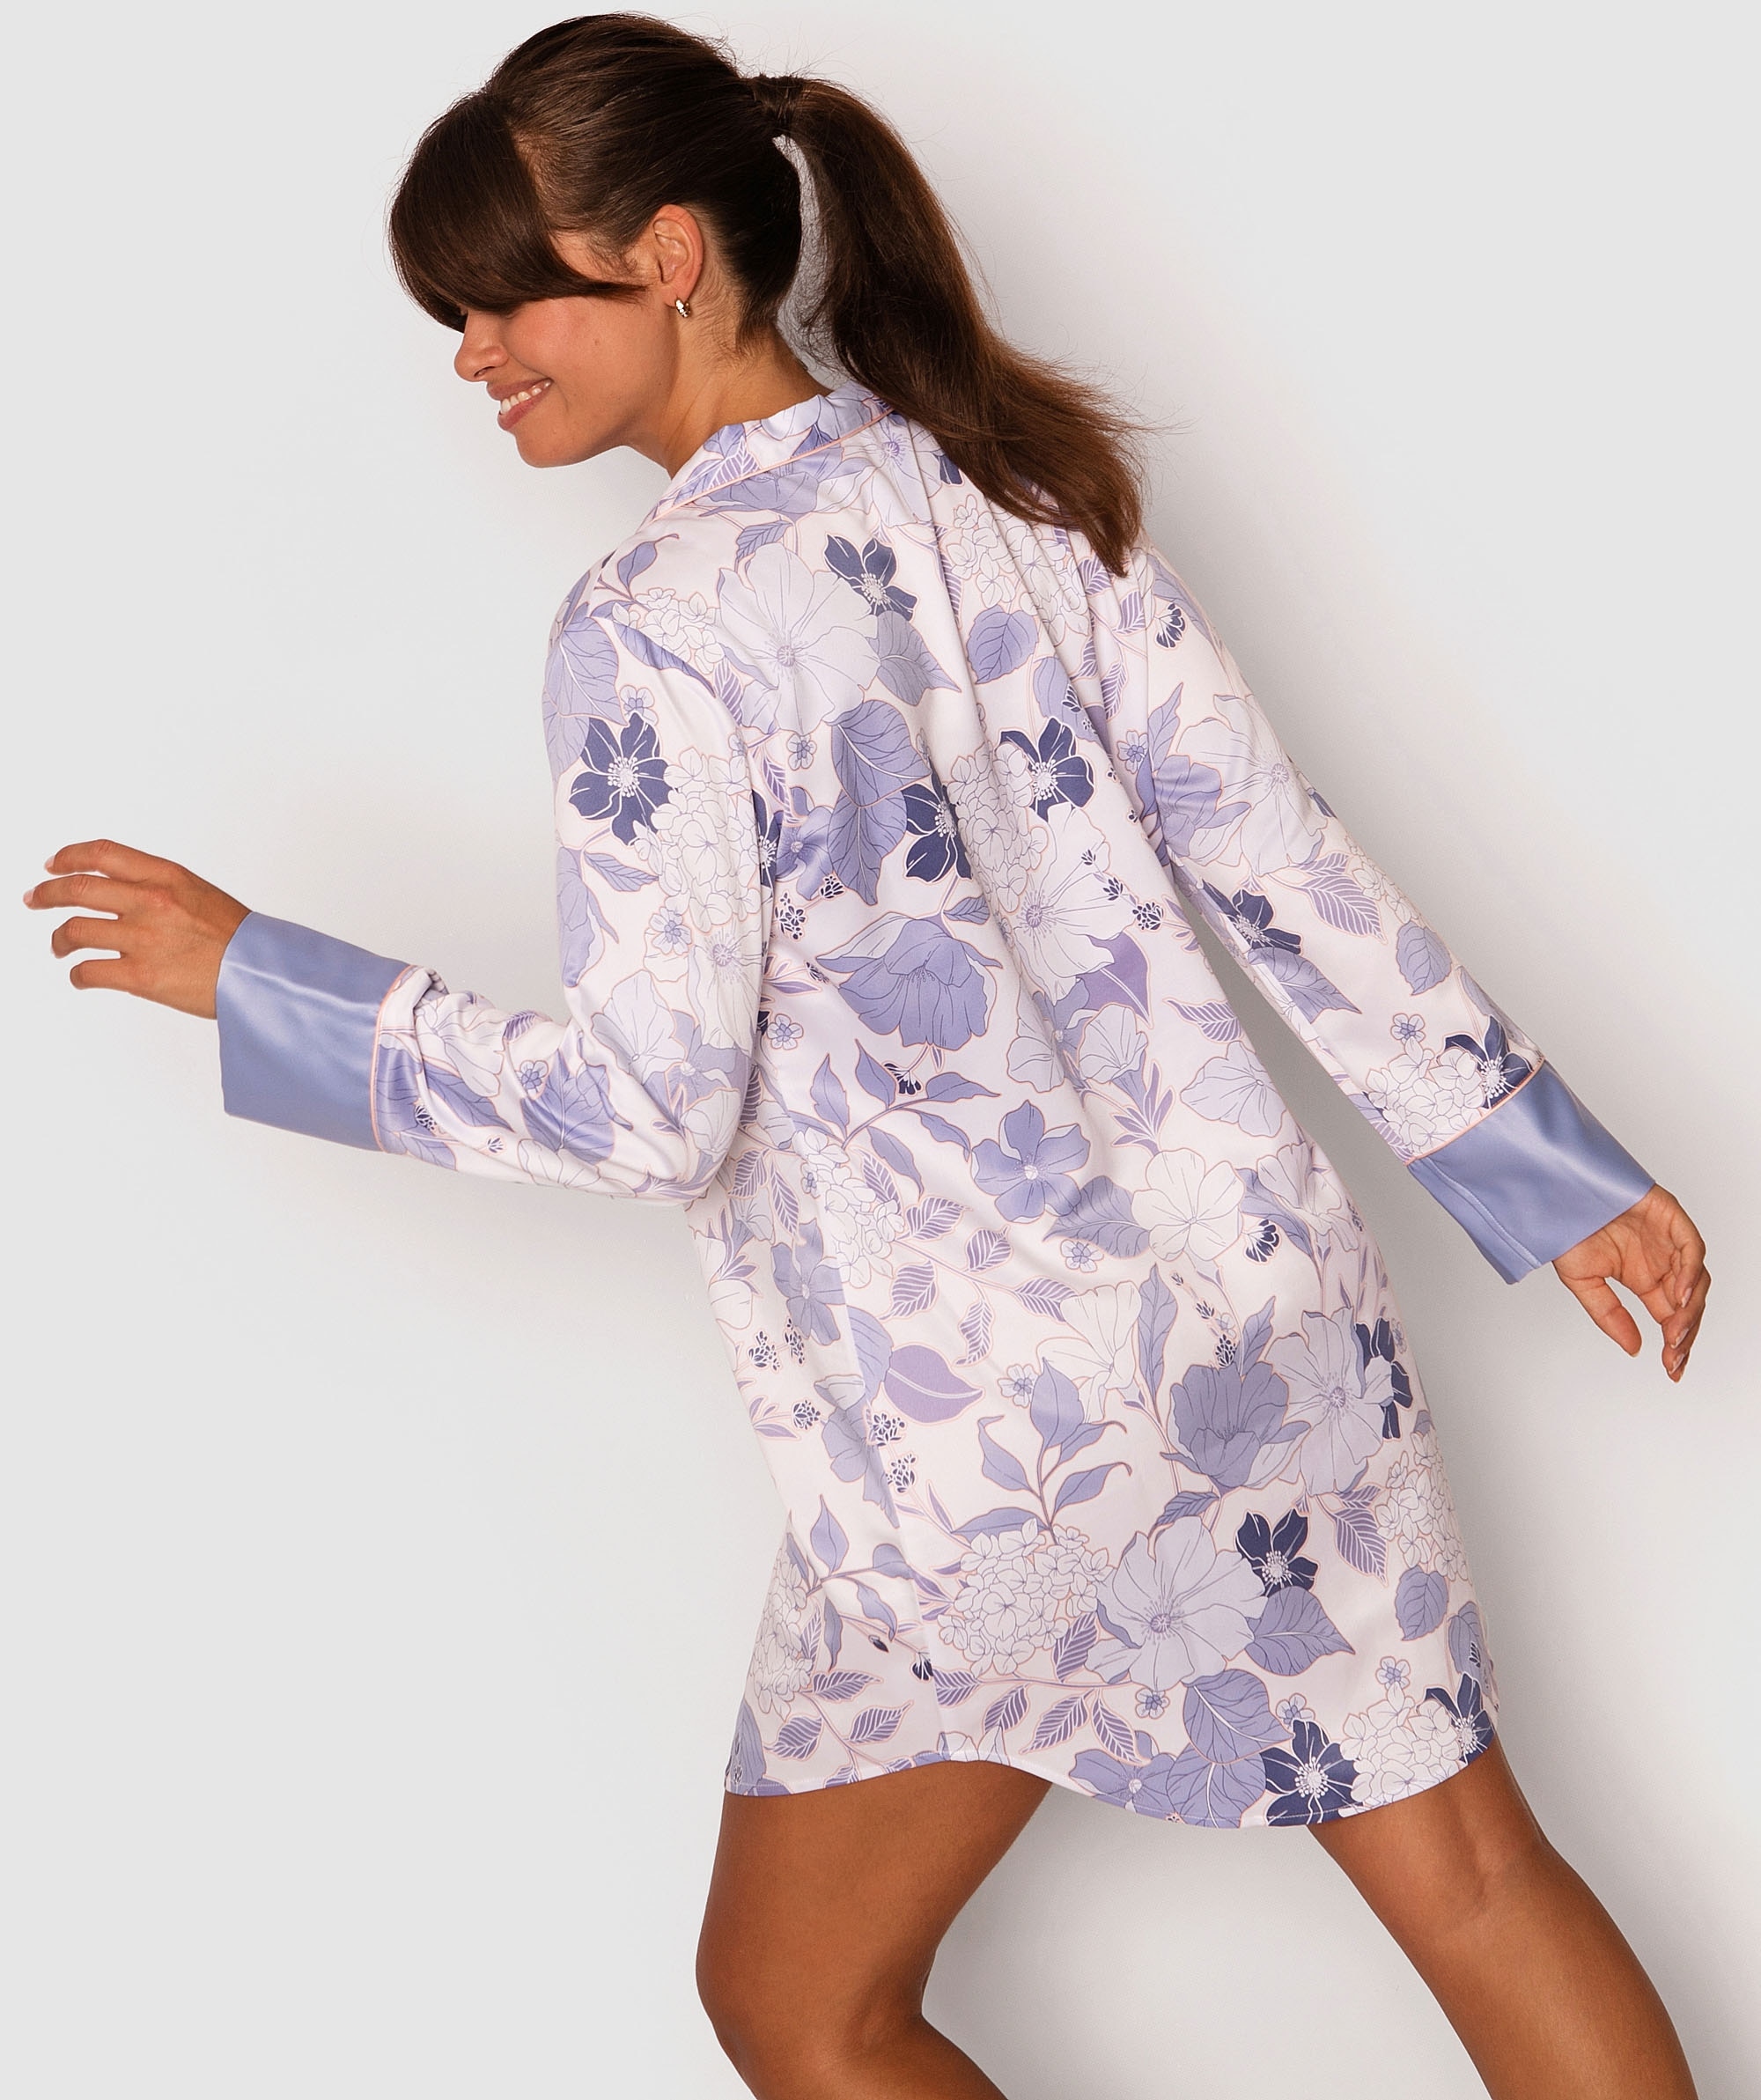 Bridgette Long Sleeve Sleep Shirt - Floral Print